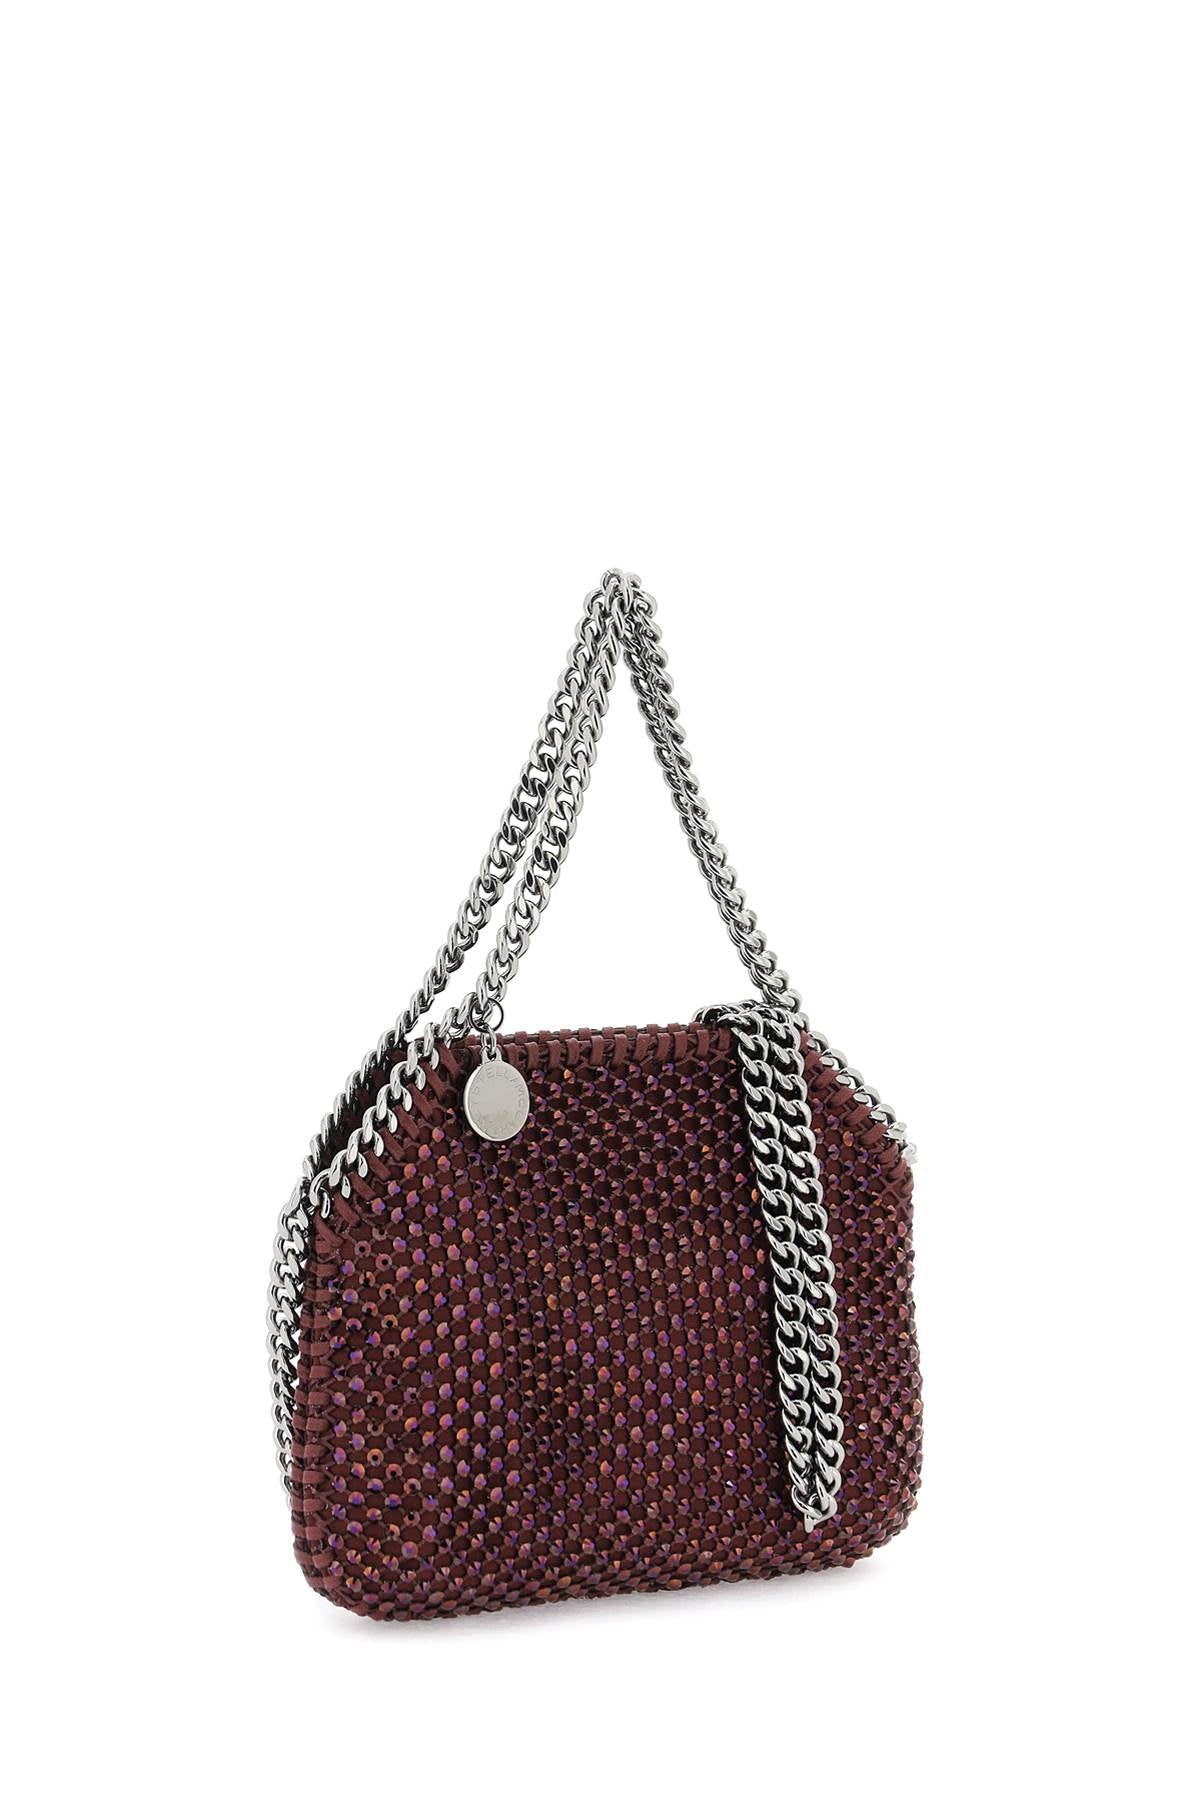 Stella mccartney falabella mini bag with mesh and crystals-2